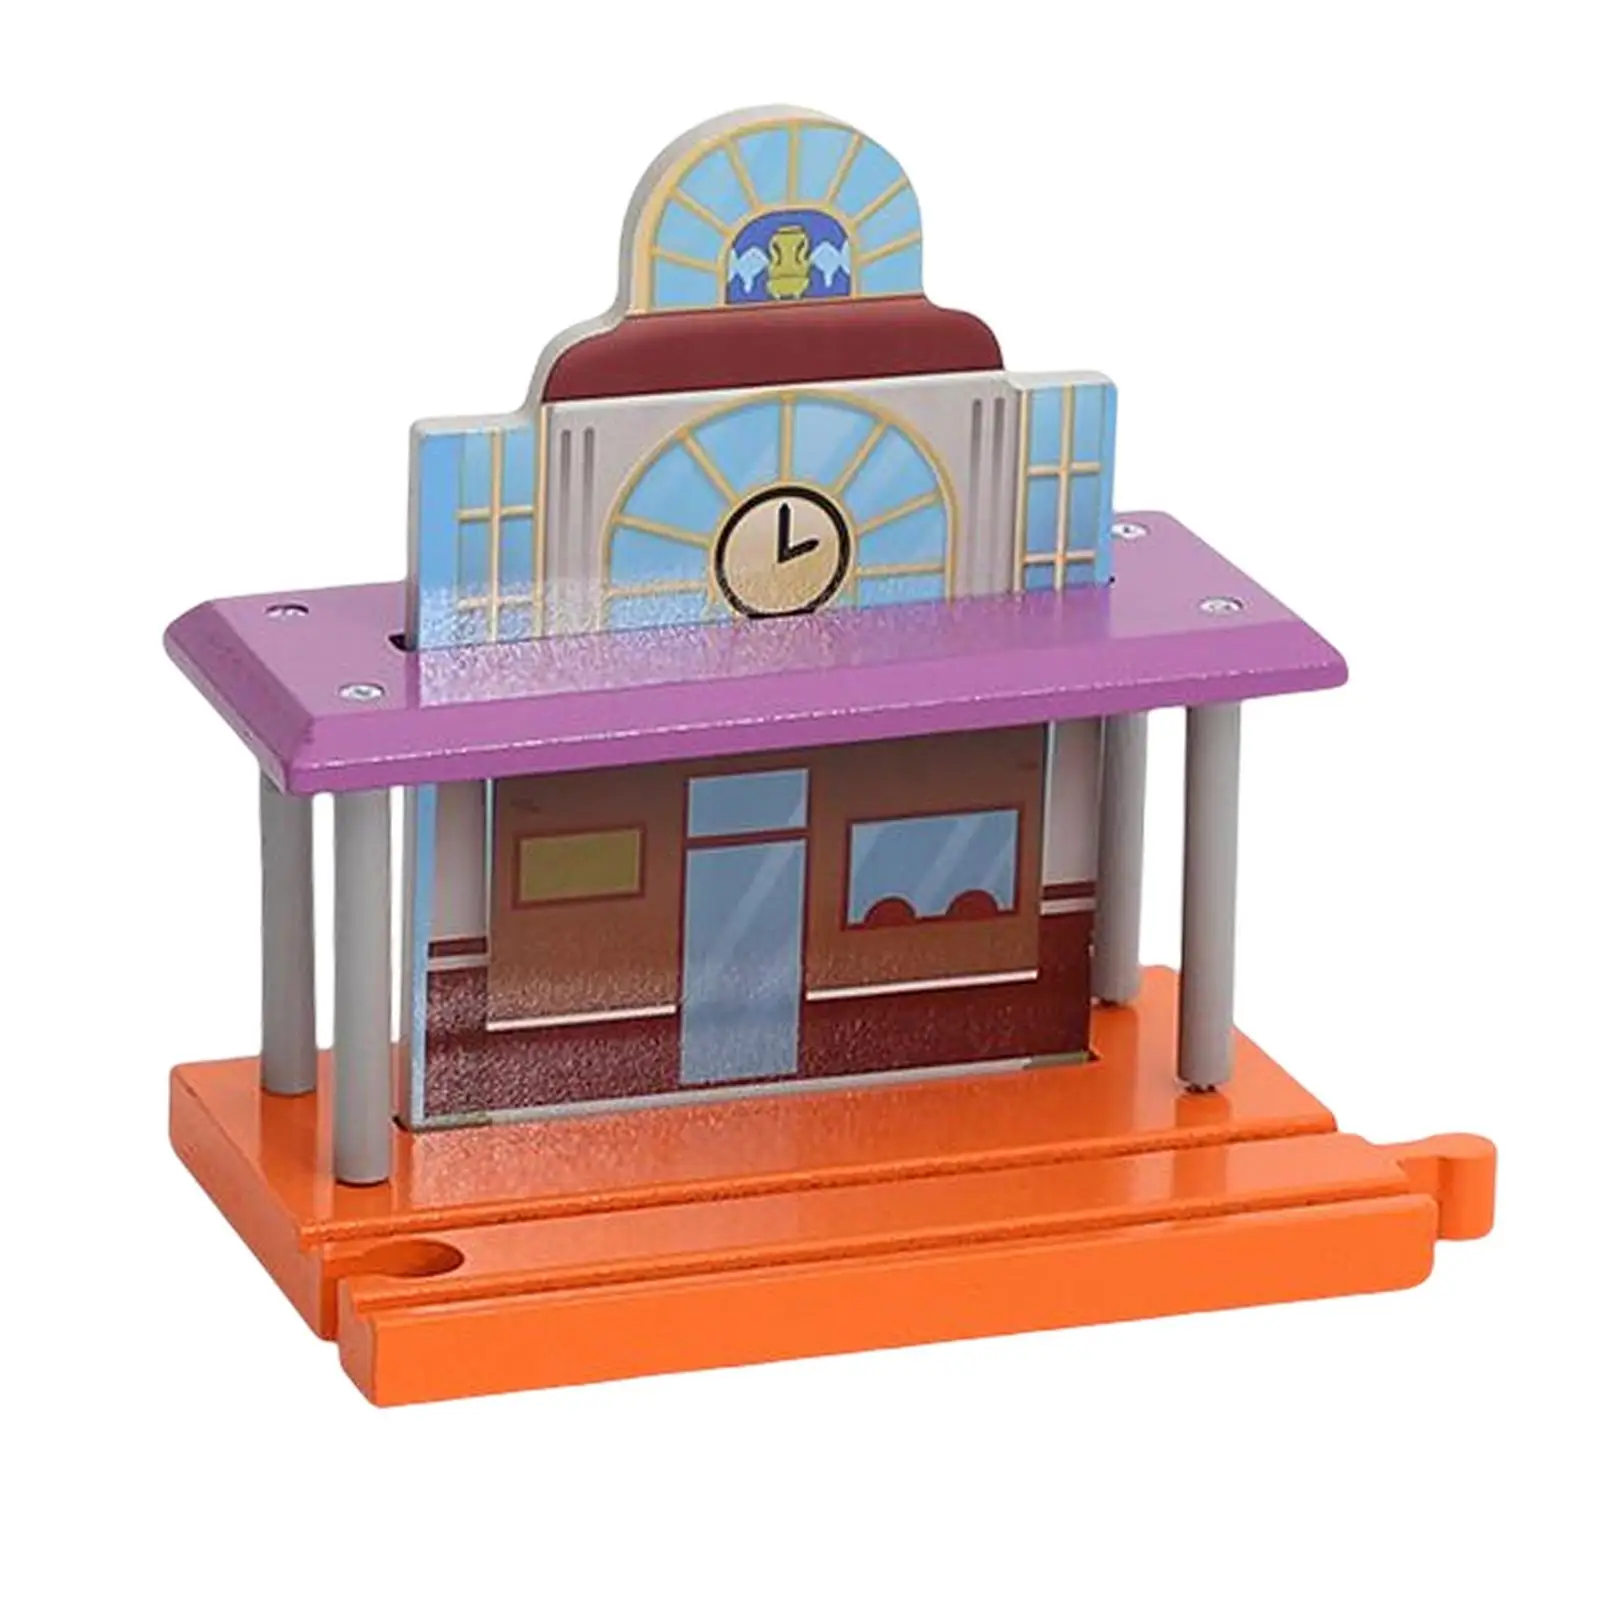 Wooden Railroad Clock Platform Track Accessories Small Locomotive Rail Car Toys Landscape for Children Kids Birthday Gifts